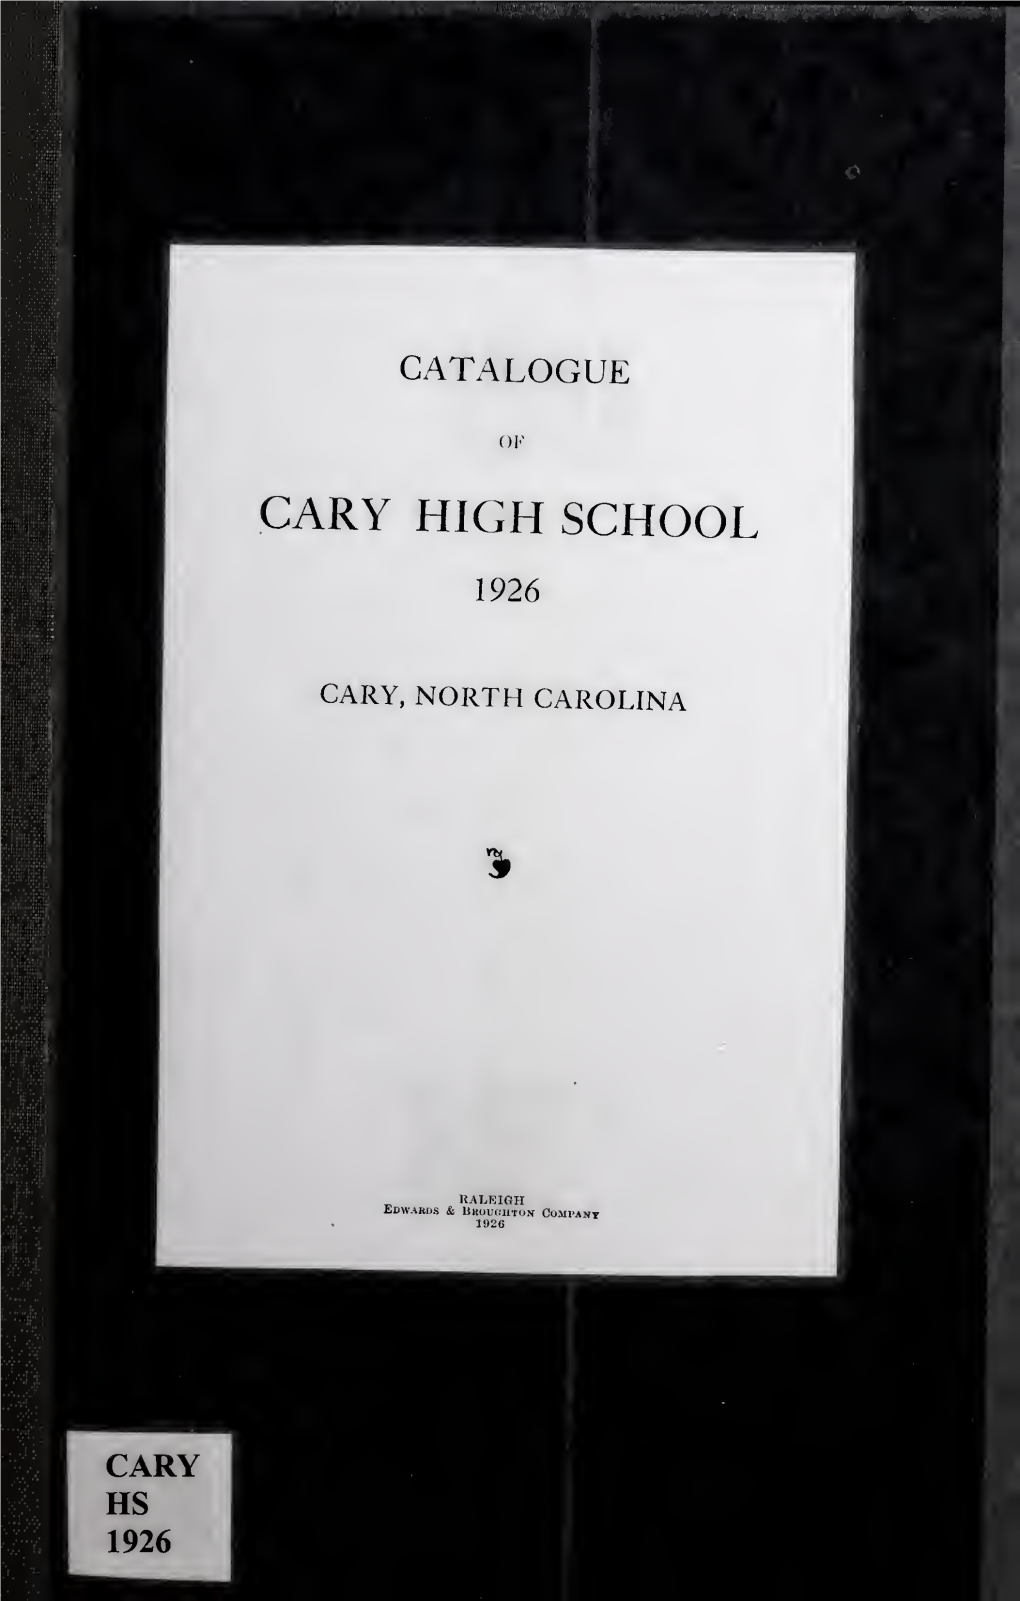 Cary High School Catalogue, 1926